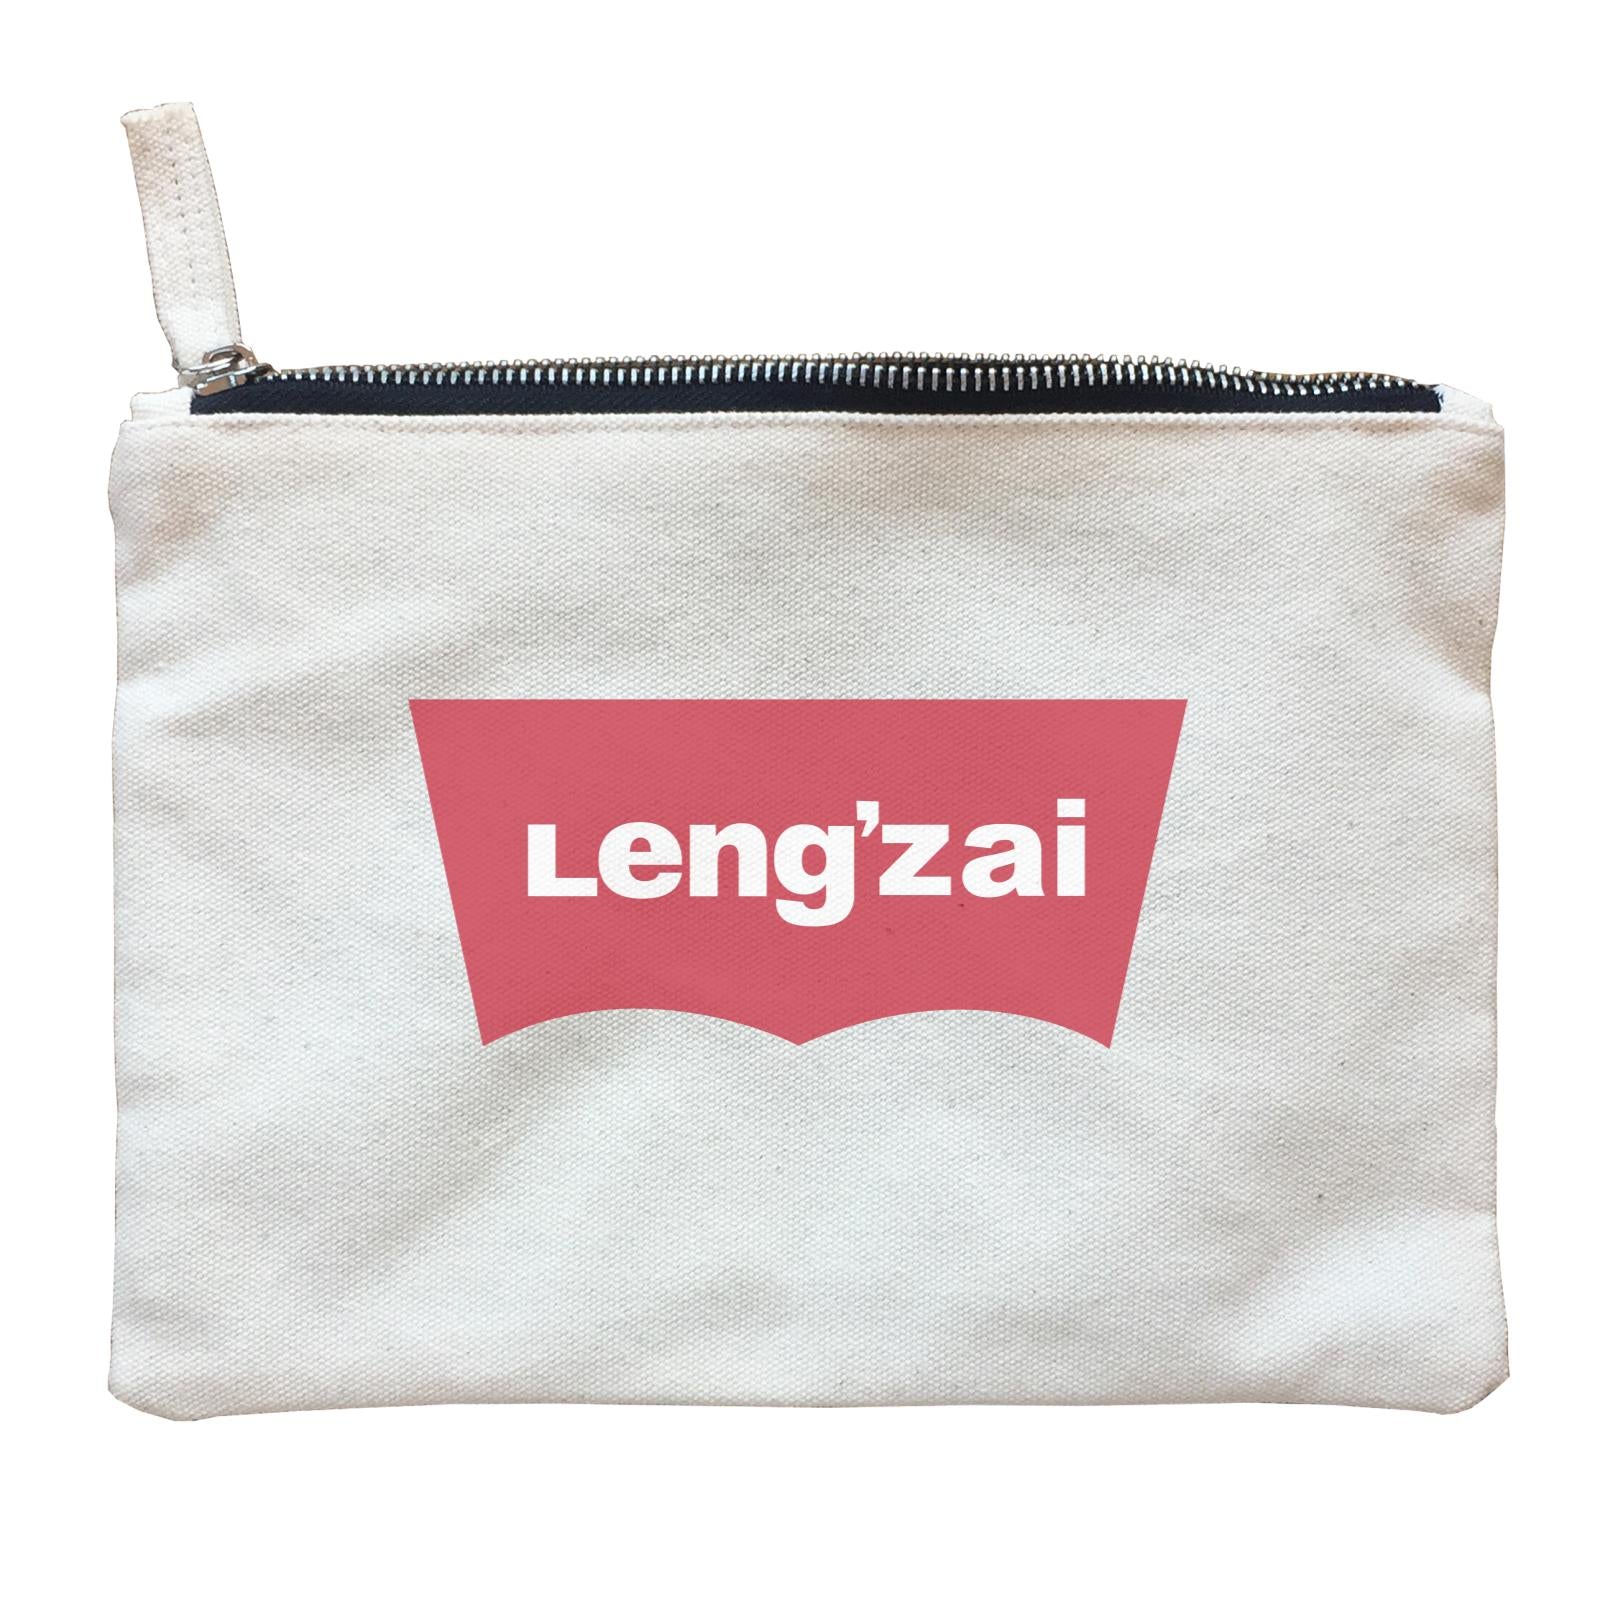 Slang Statement Lengzai Accessories Zipper Pouch